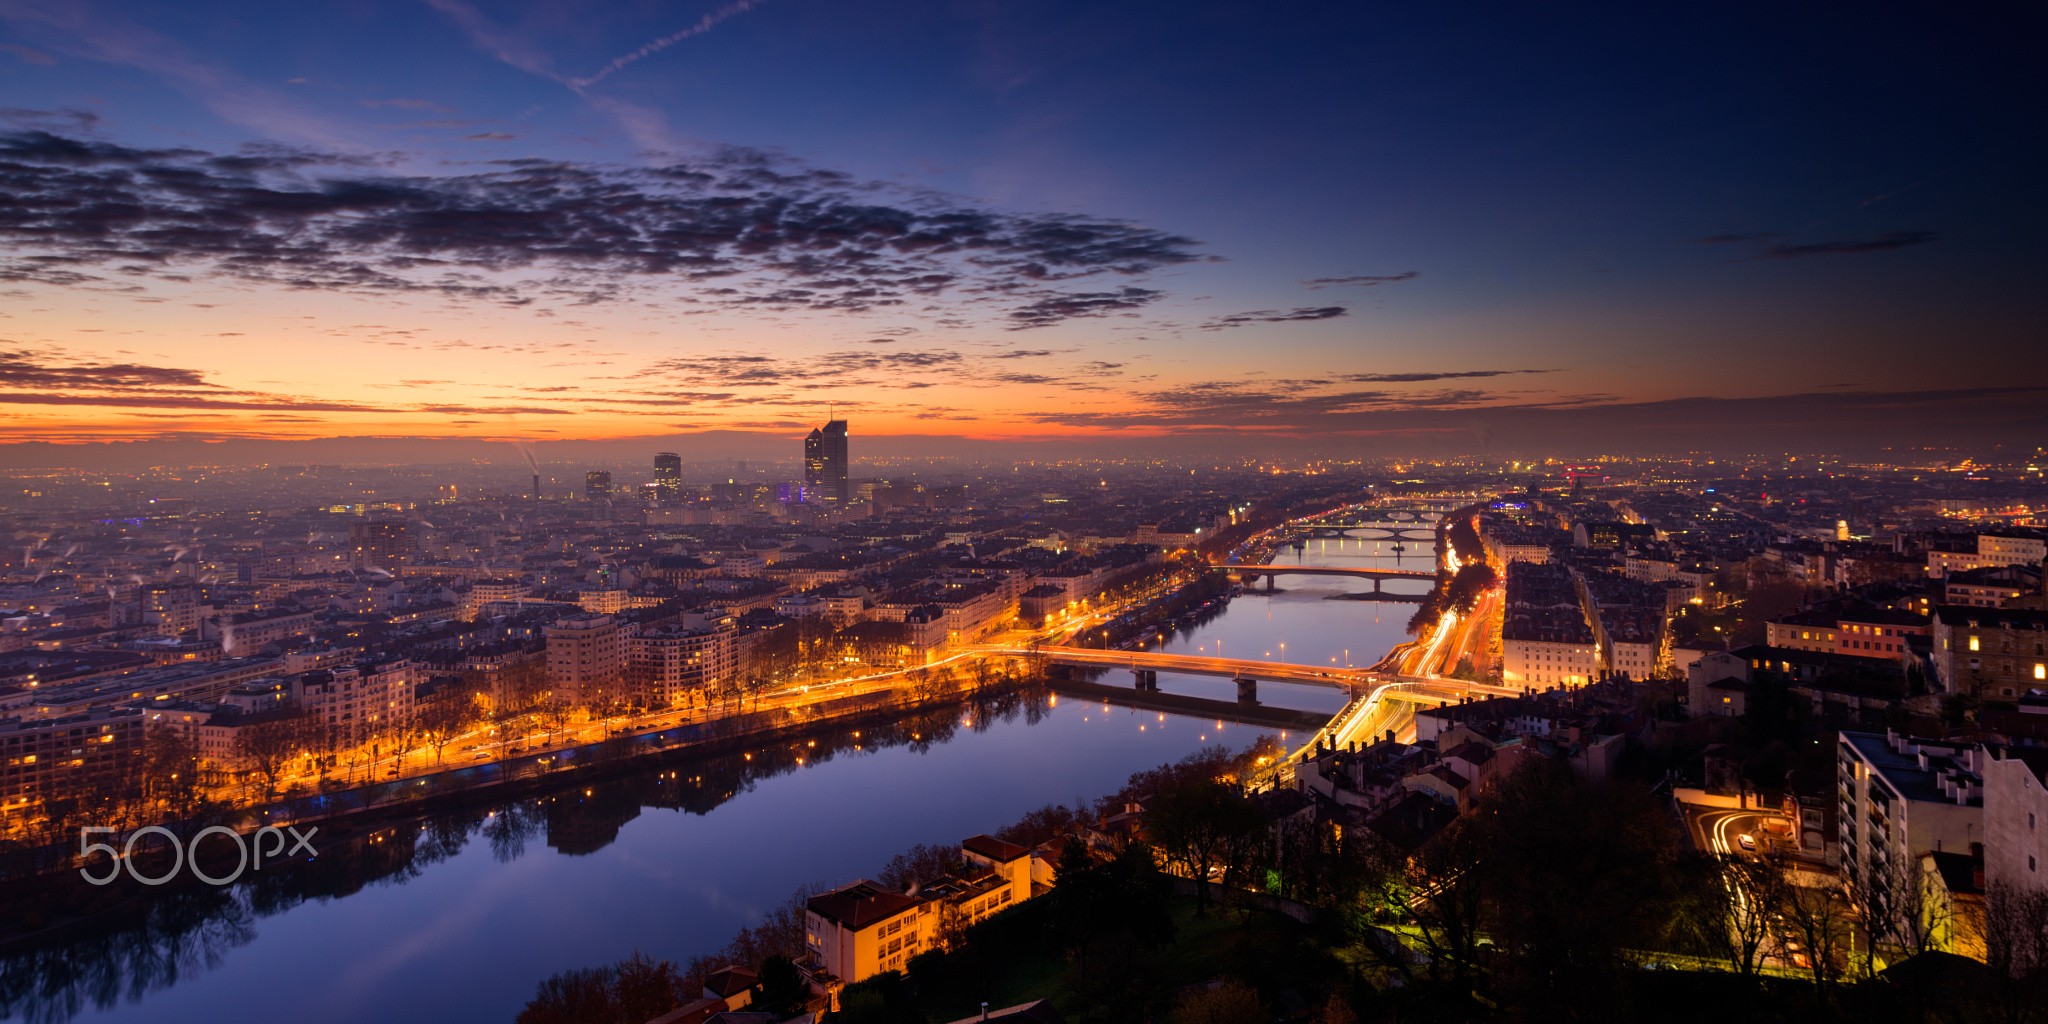 General 2048x1024 cityscape Lyon city lights sunset river France 500px